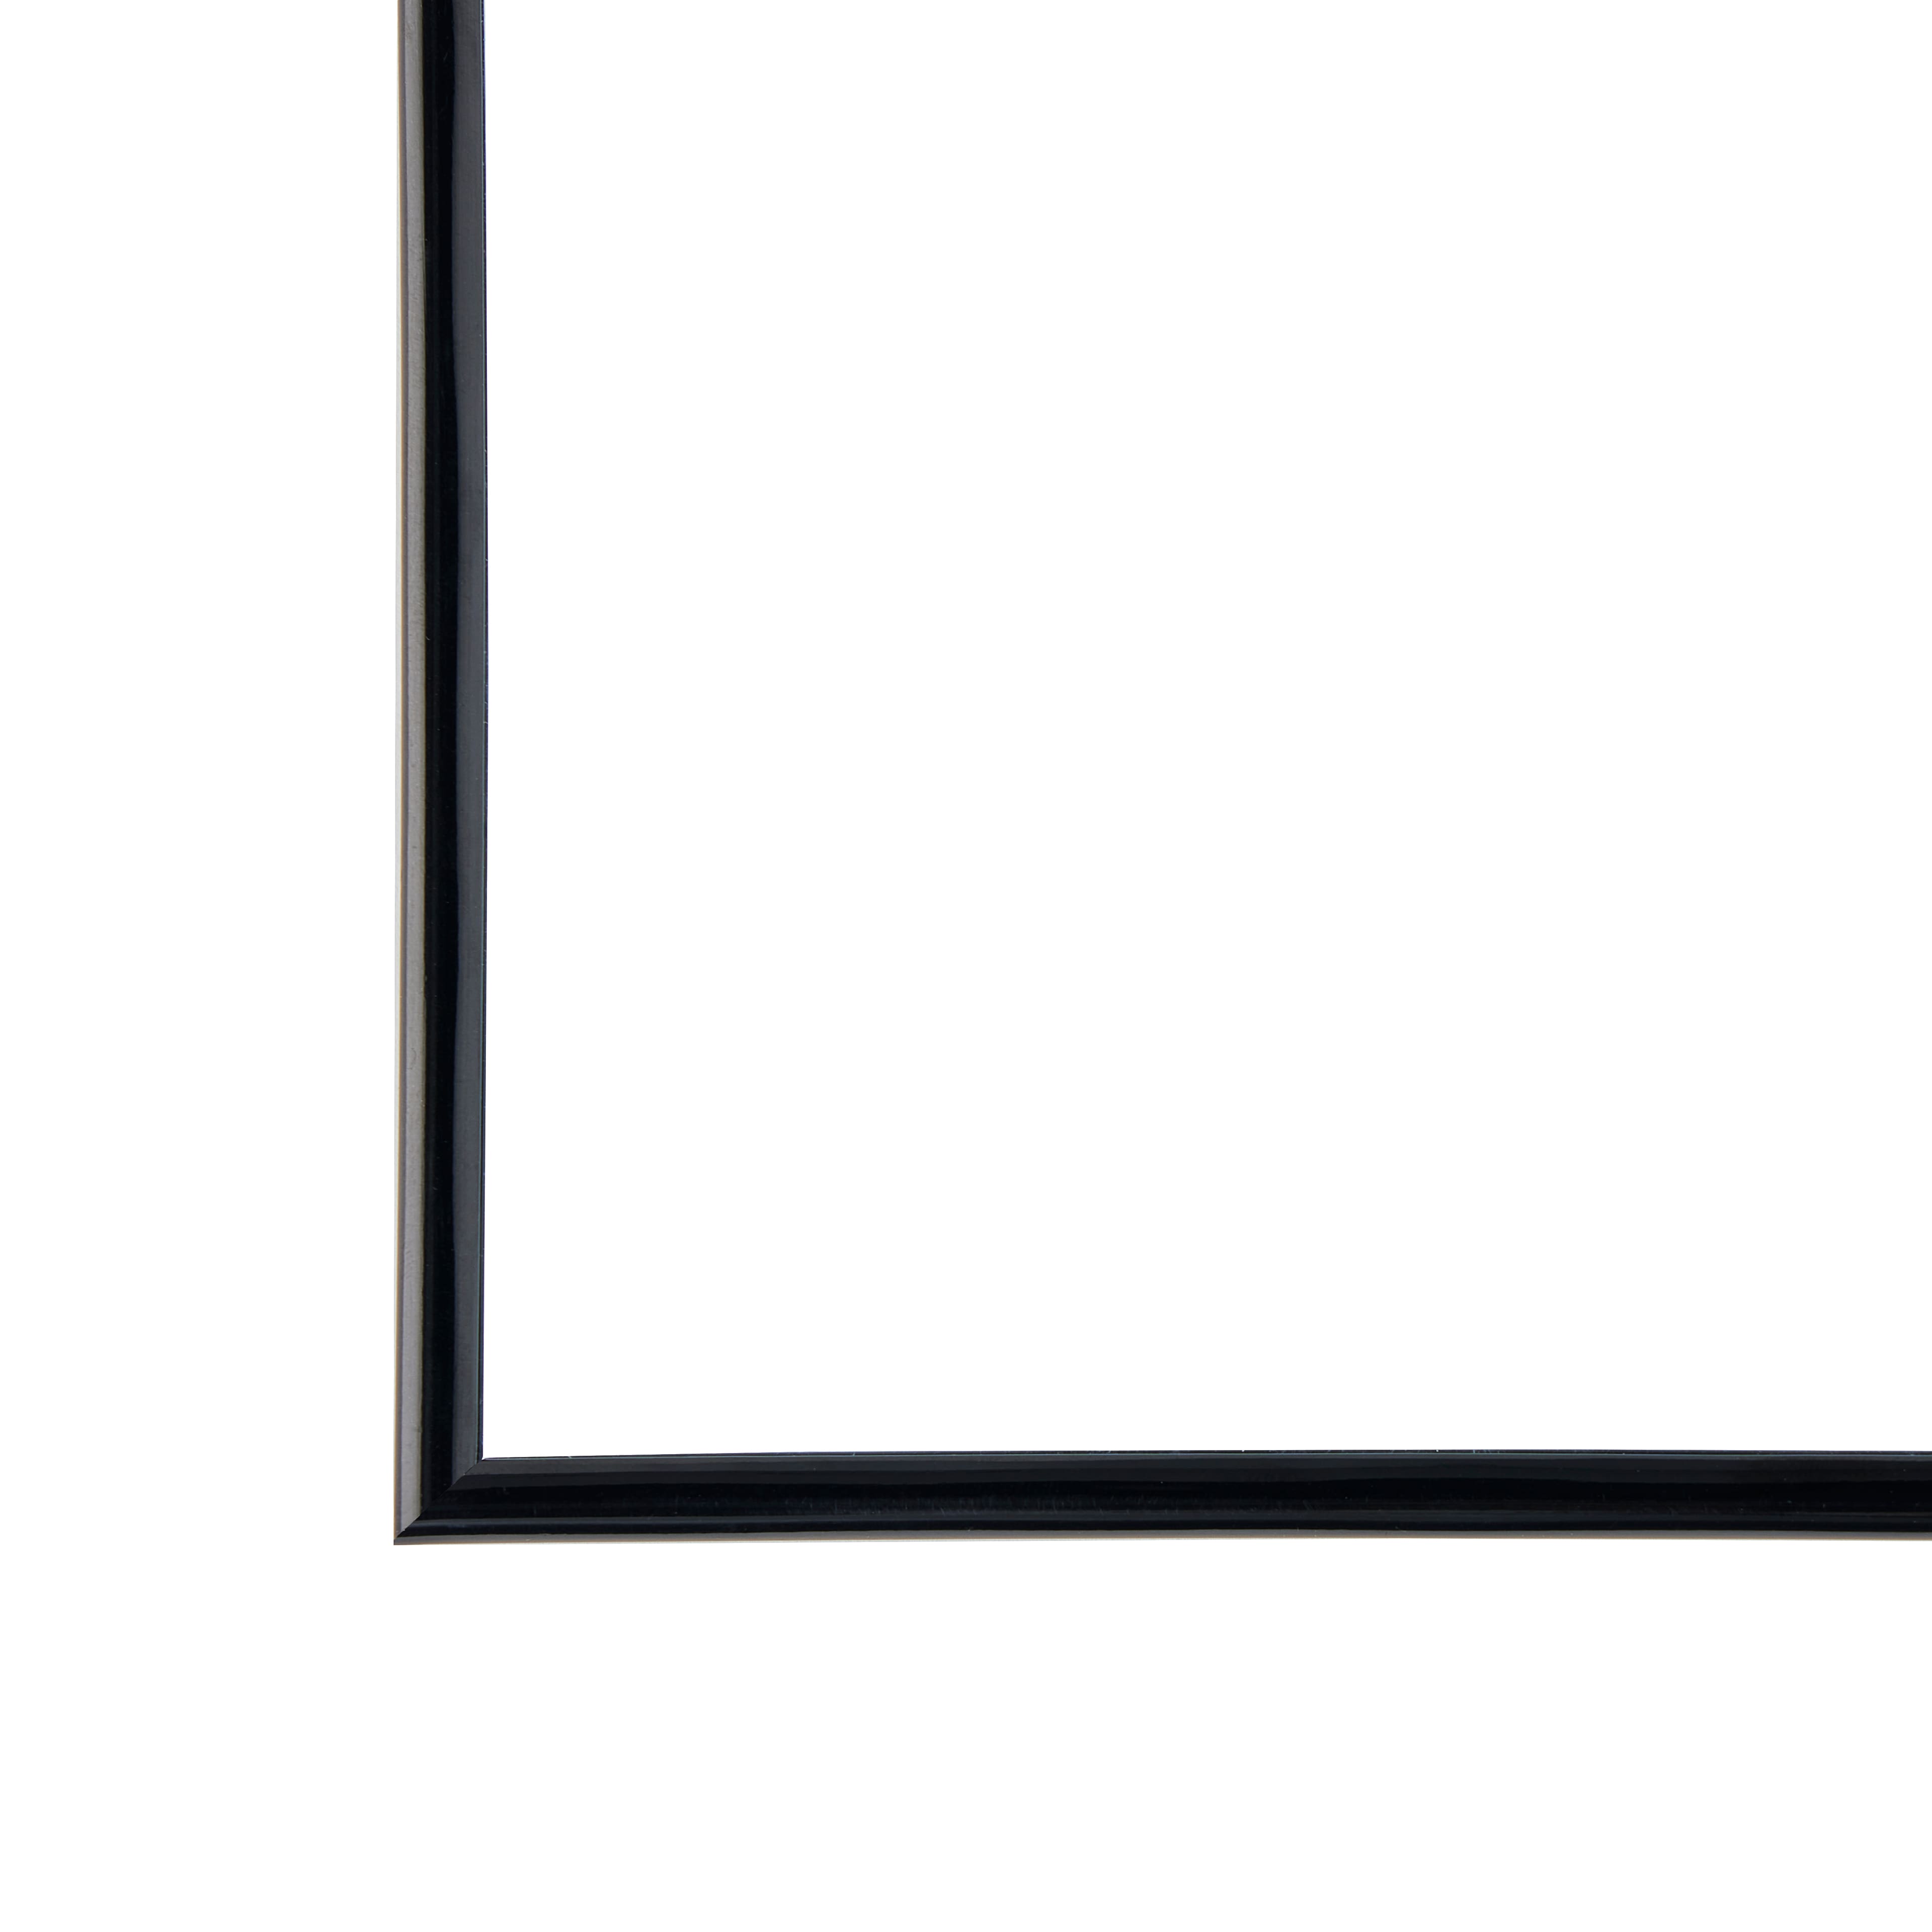 Black Thin Float Frame, Basics by Studio D&#xE9;cor&#xAE;